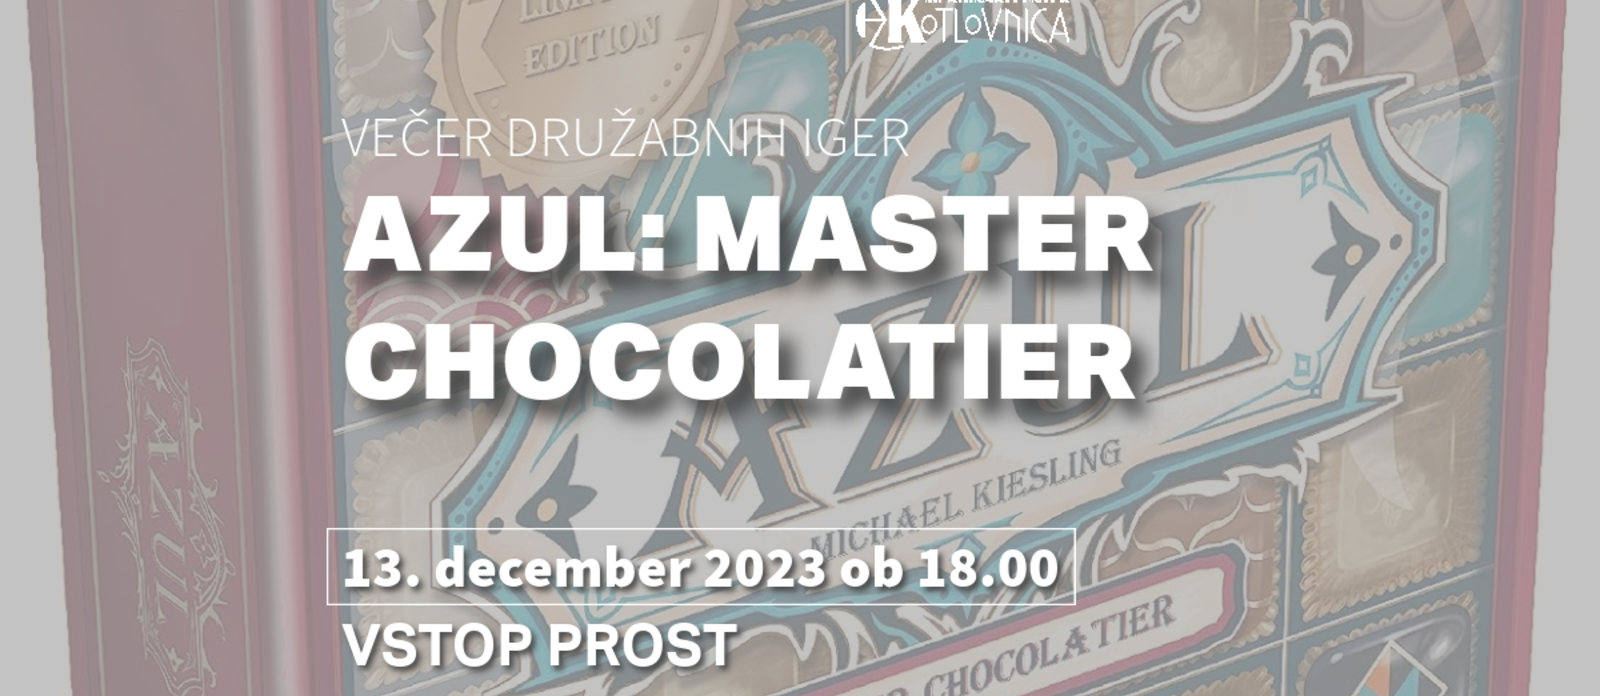 Večer družabnih iger: Azul - Master Chocolatier